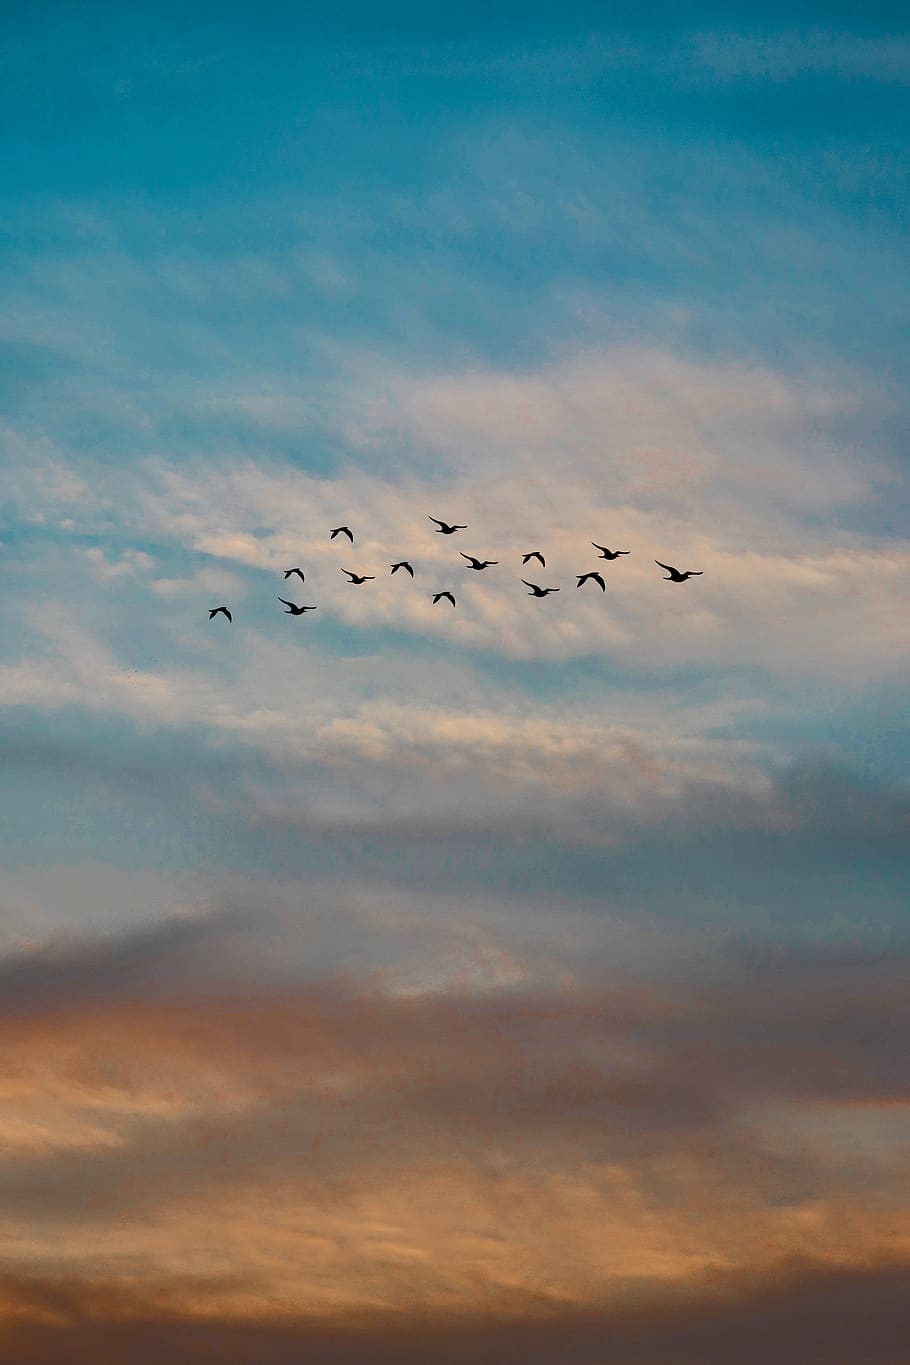 HD wallpaper: Photo of a Flock of Flying Birds, evening, evening ...